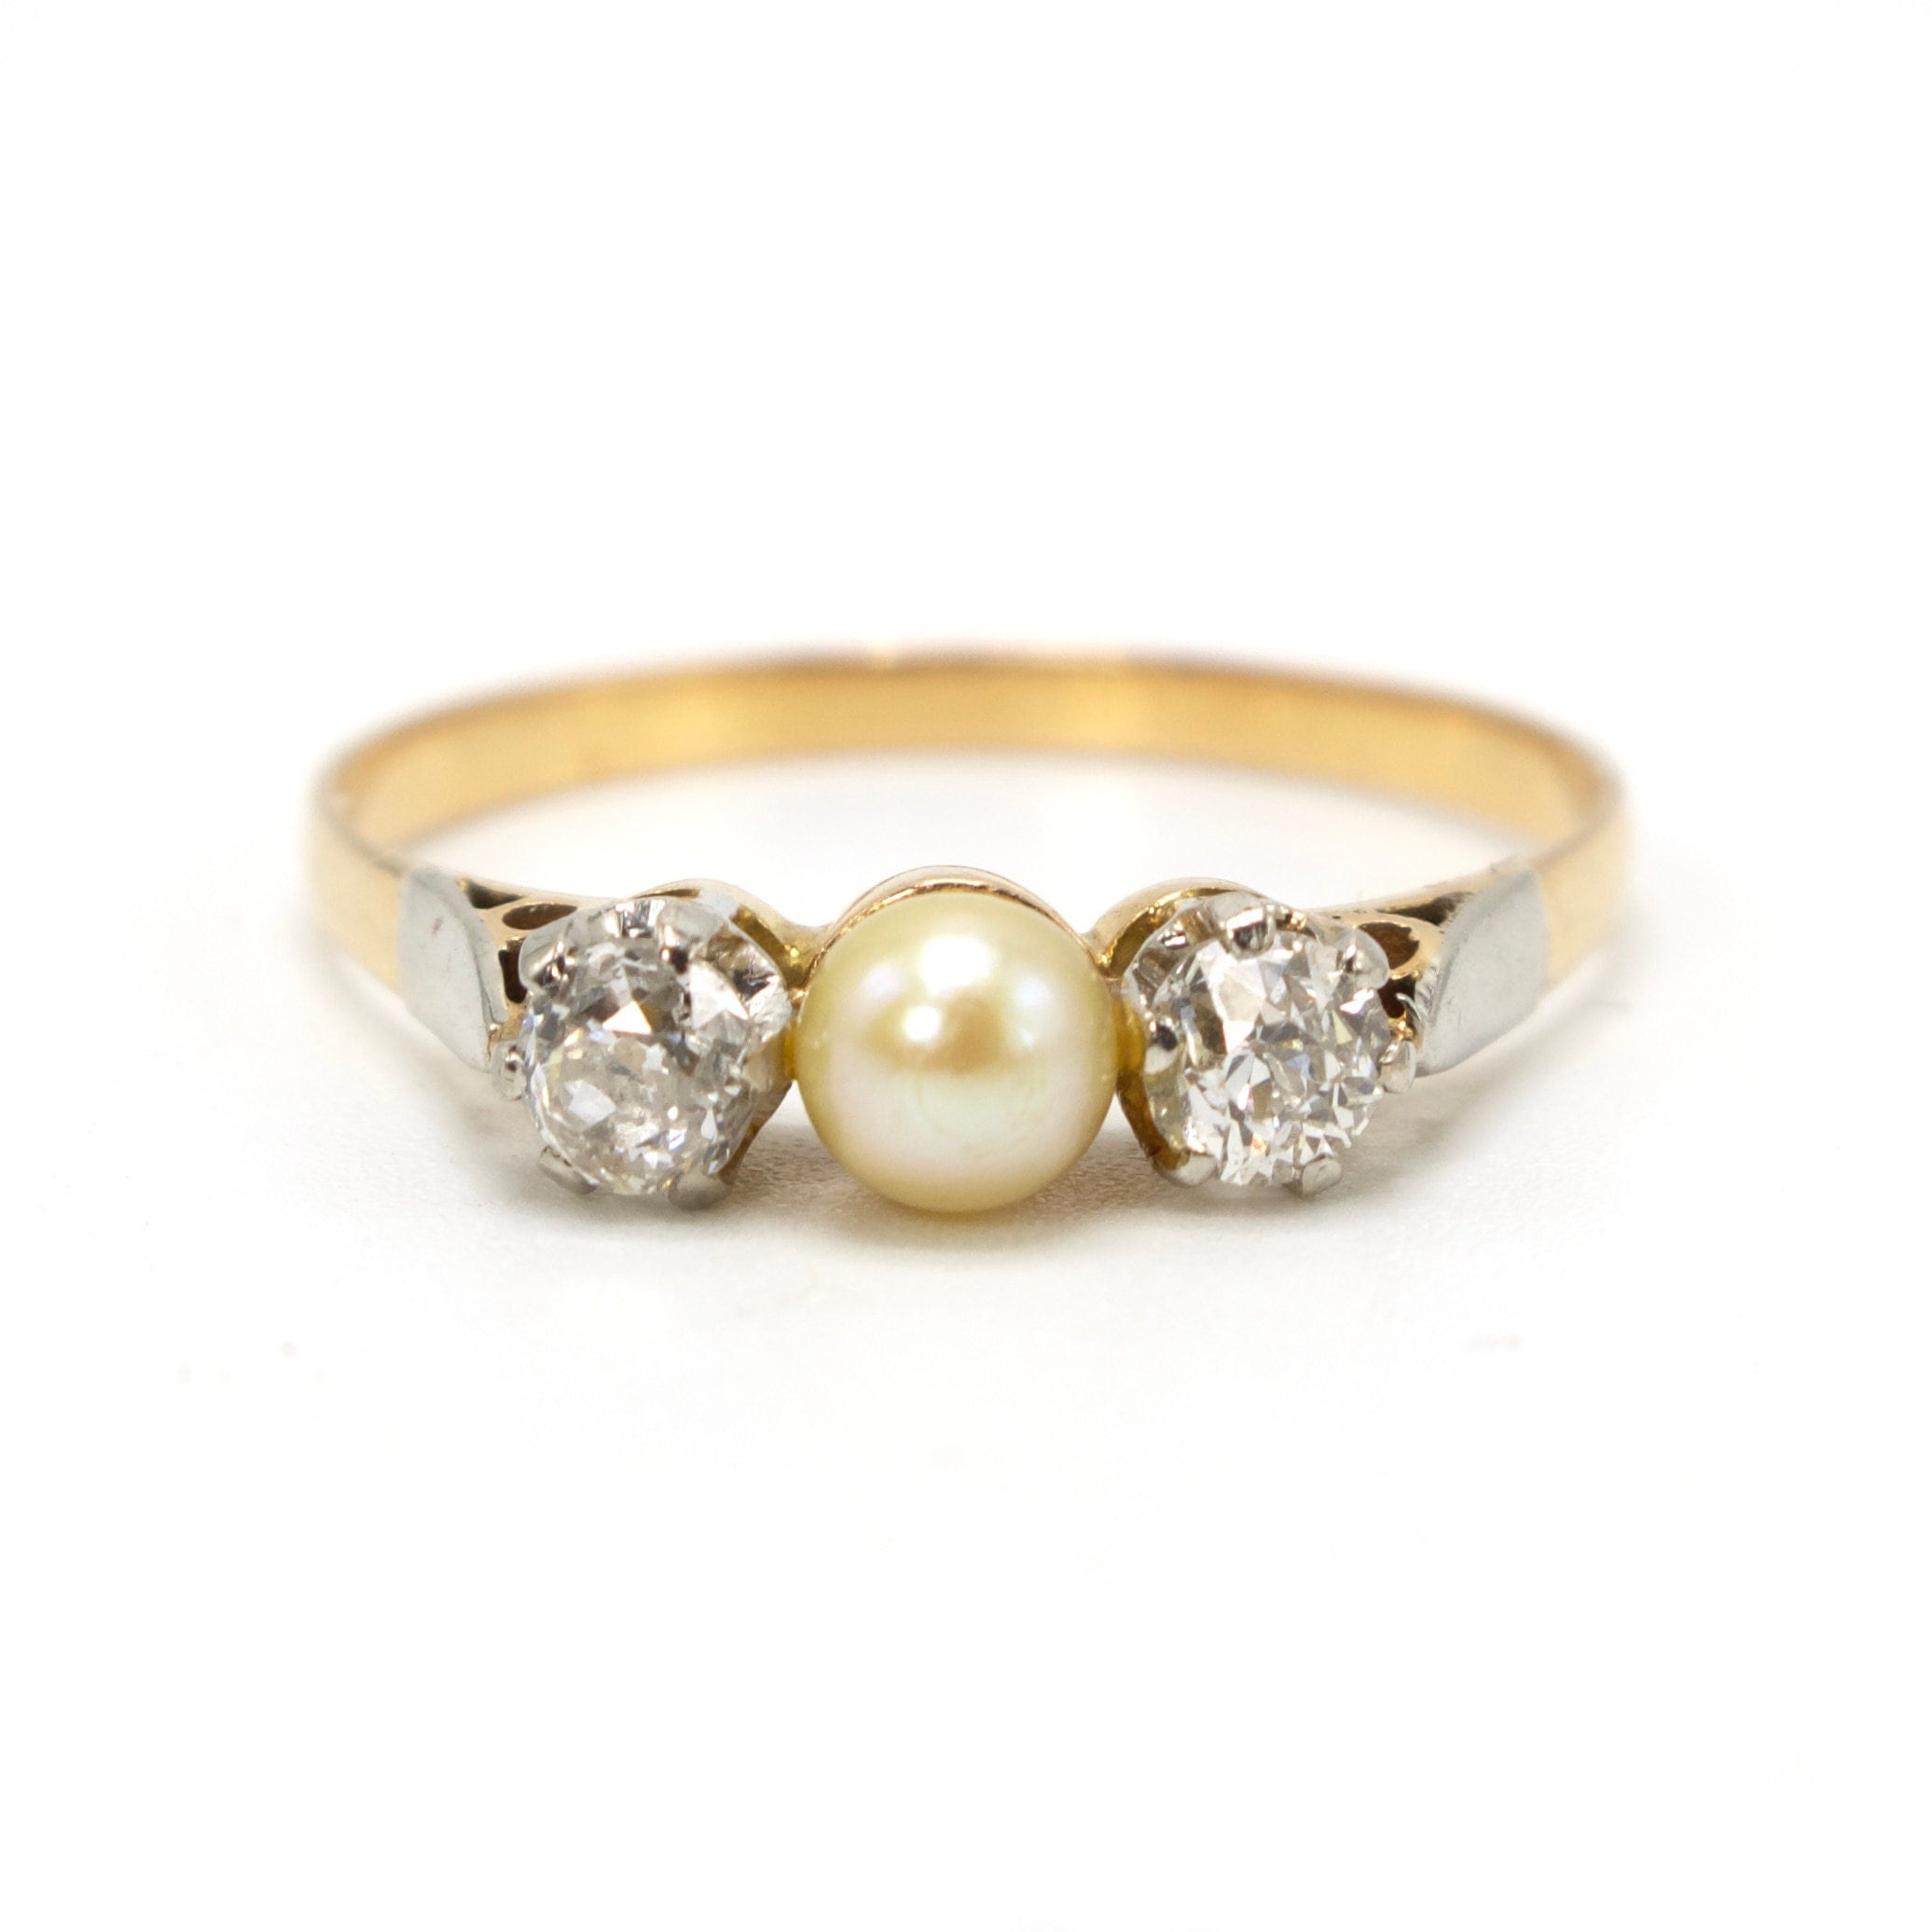 pearl grape ring set in 14k white gold—60's vintage - Unique Gold & Diamonds